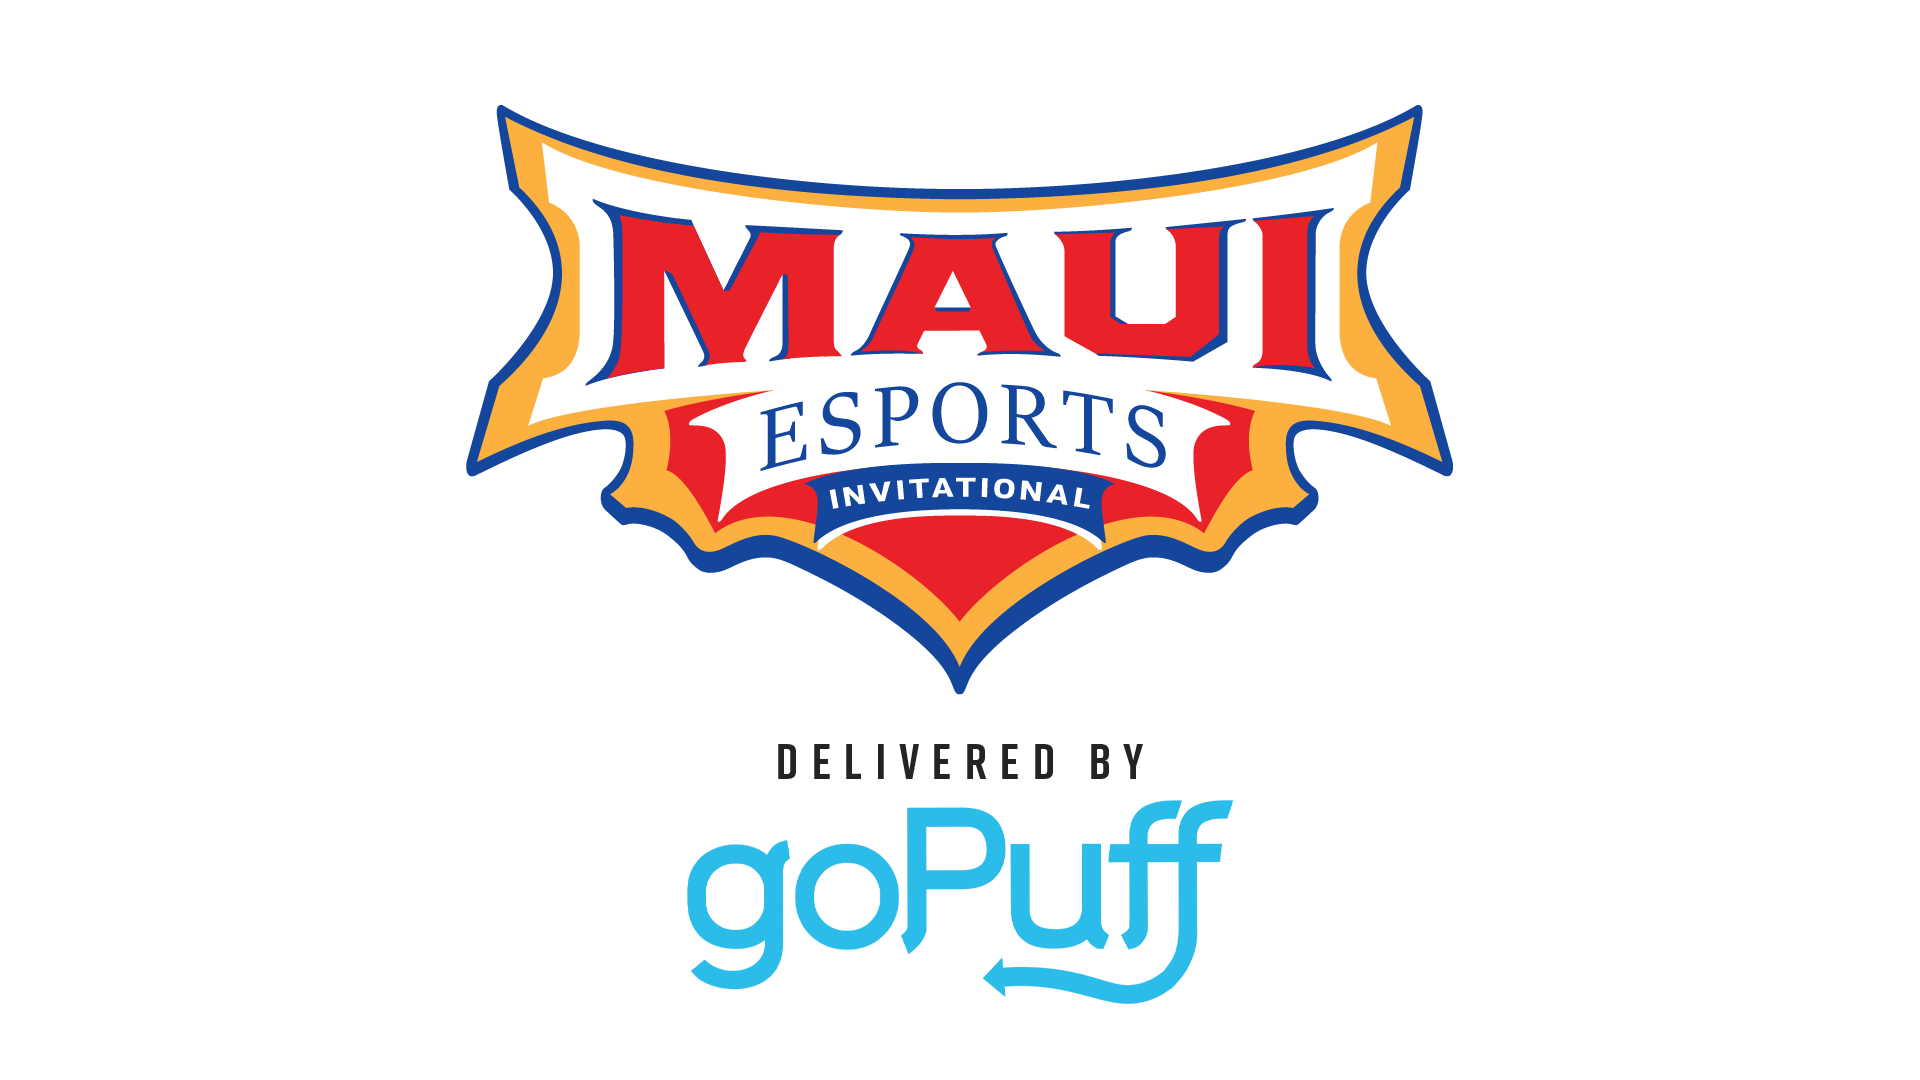 Maui_DeliveredbygoPuff